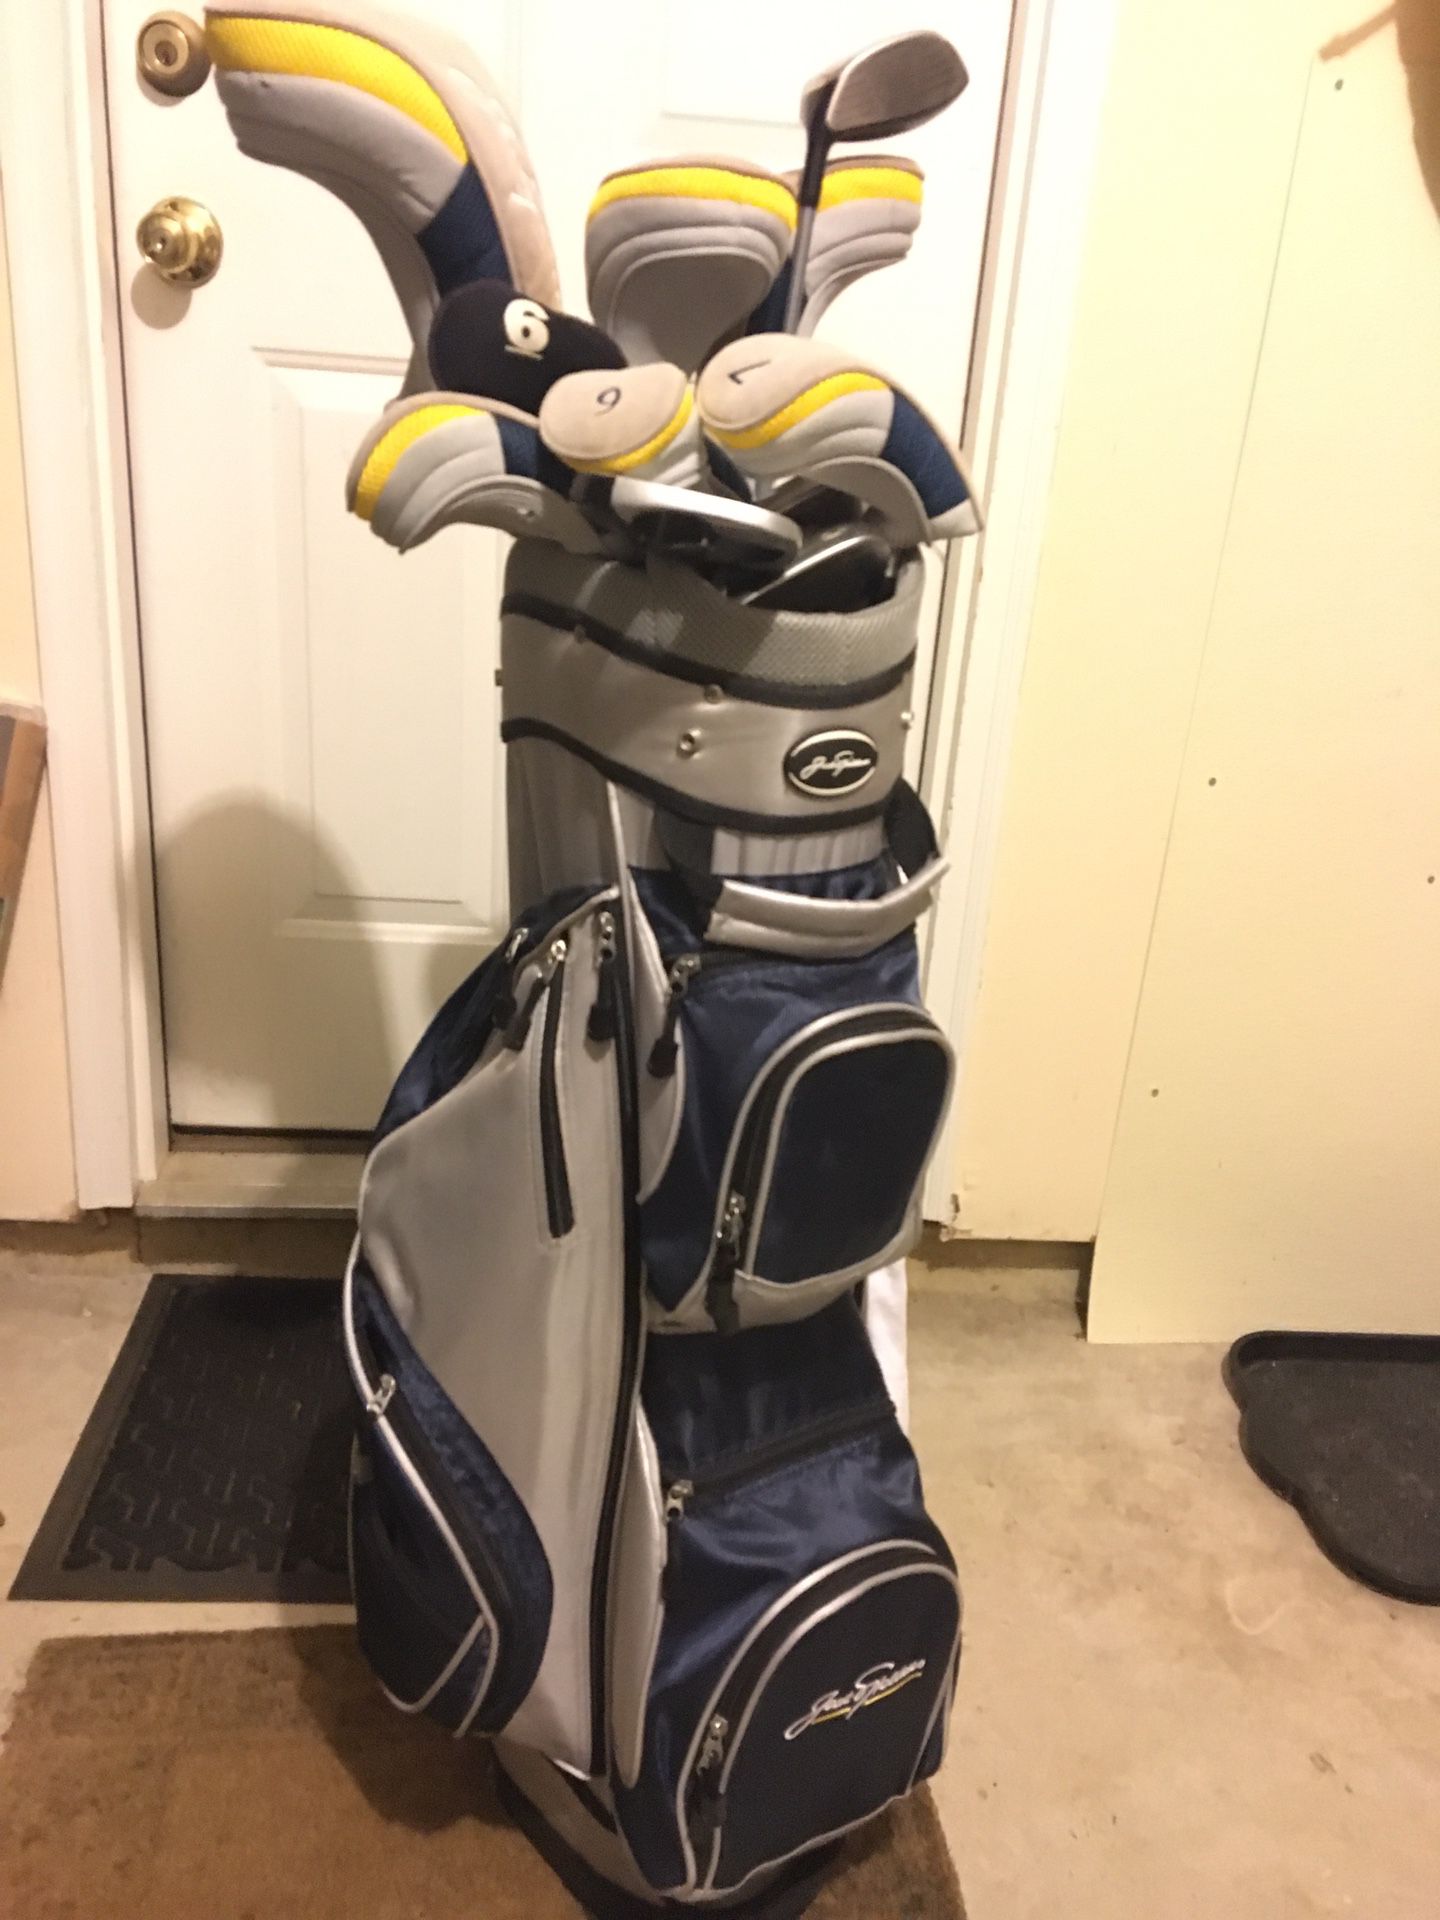 Ladies Golf Club full set and bag!